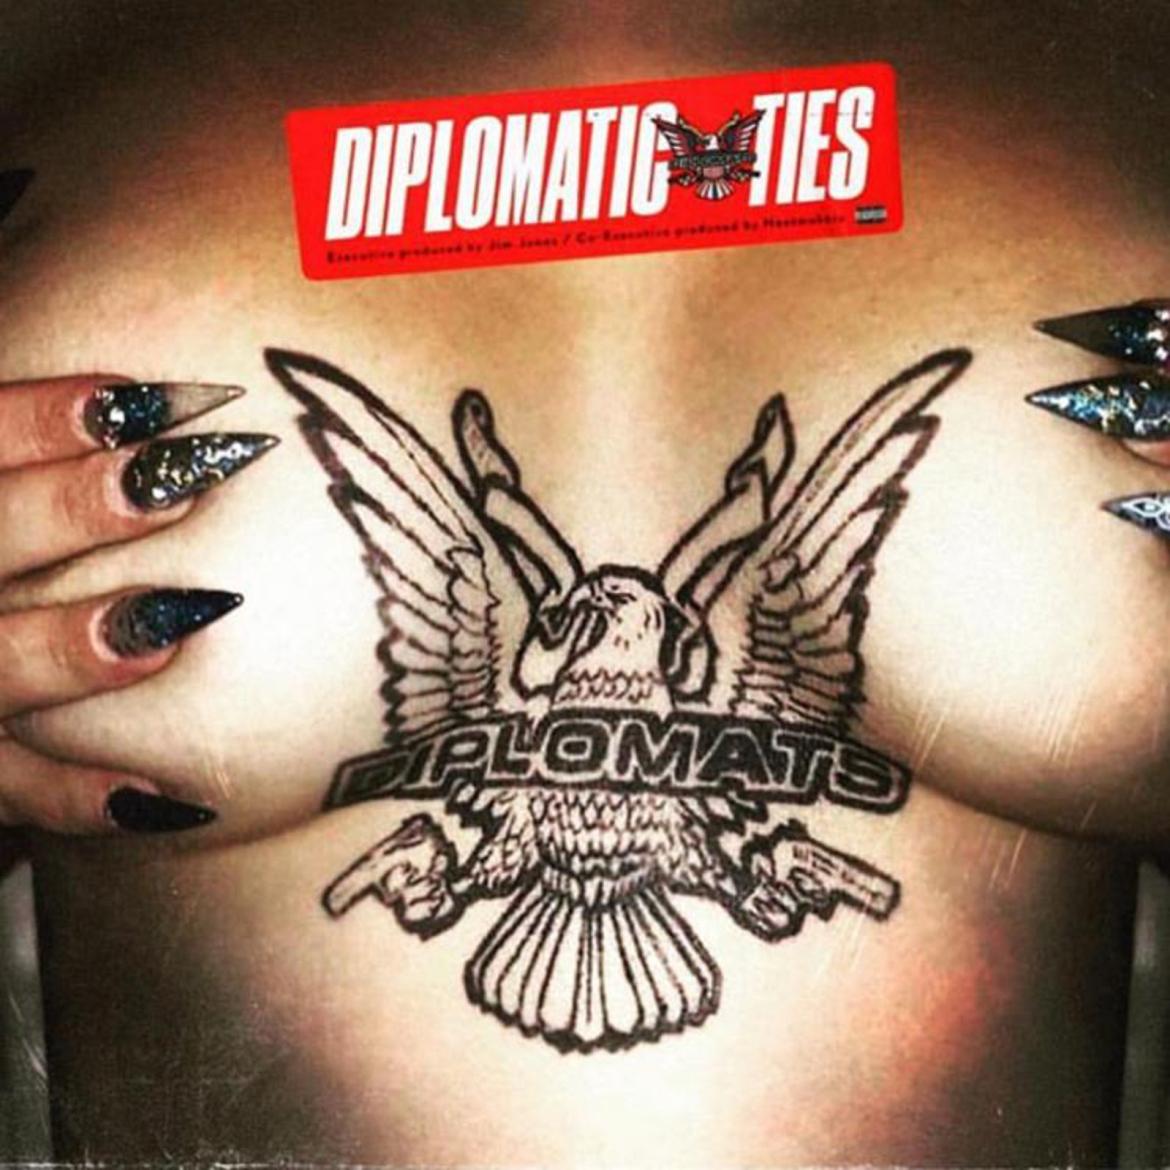 The Diplomats – Diplomatic Ties (Cover)